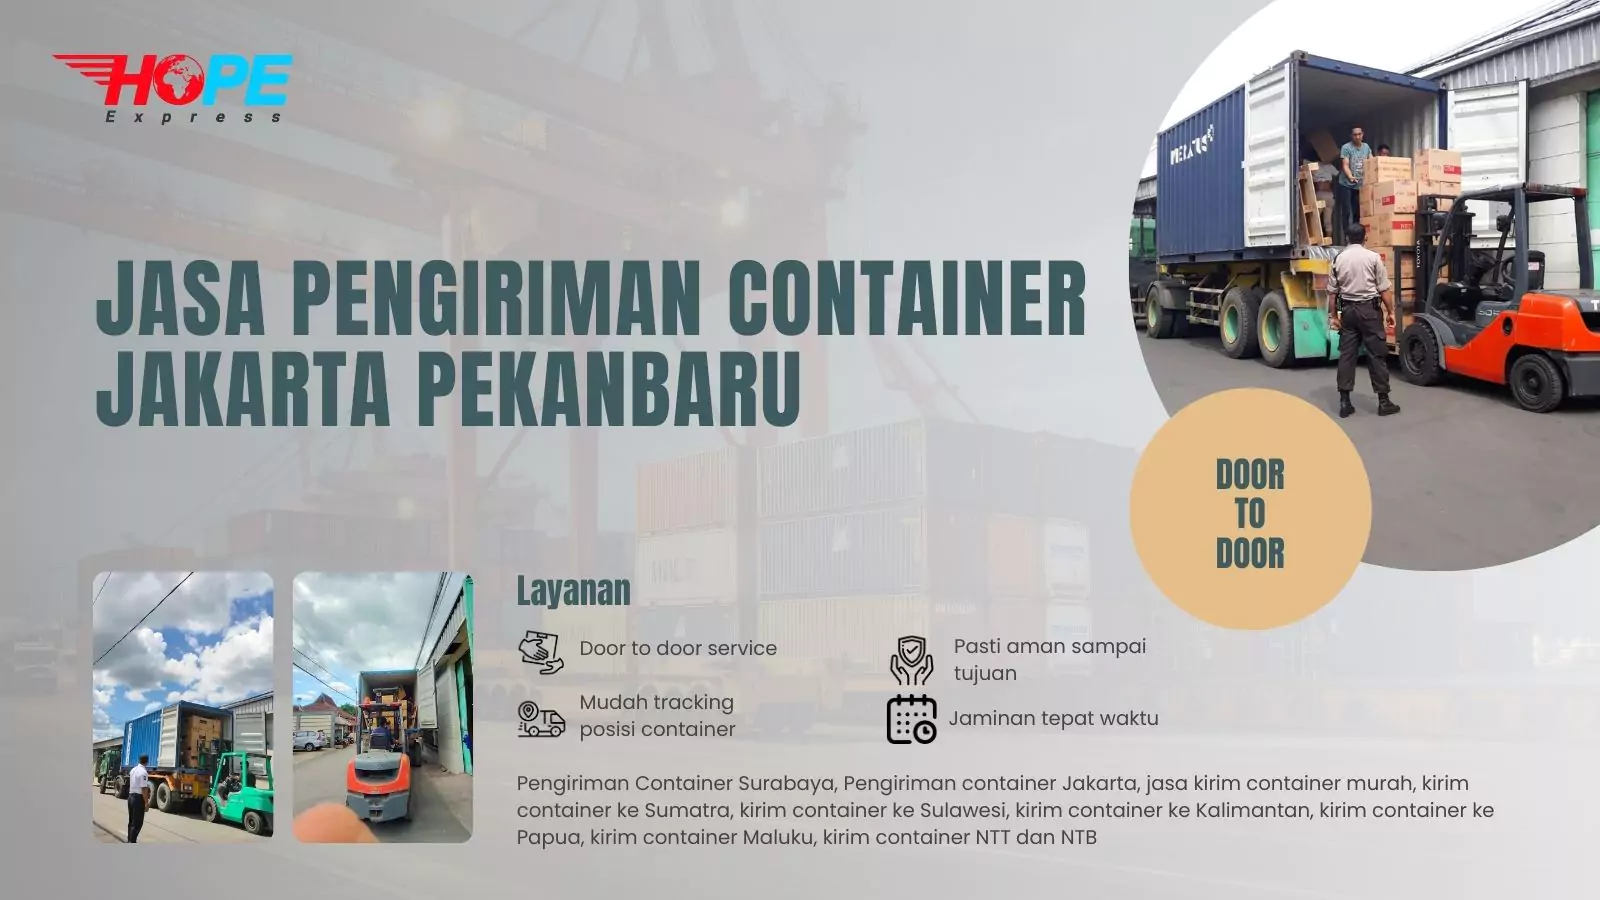 Jasa Pengiriman Container Jakarta Pekanbaru